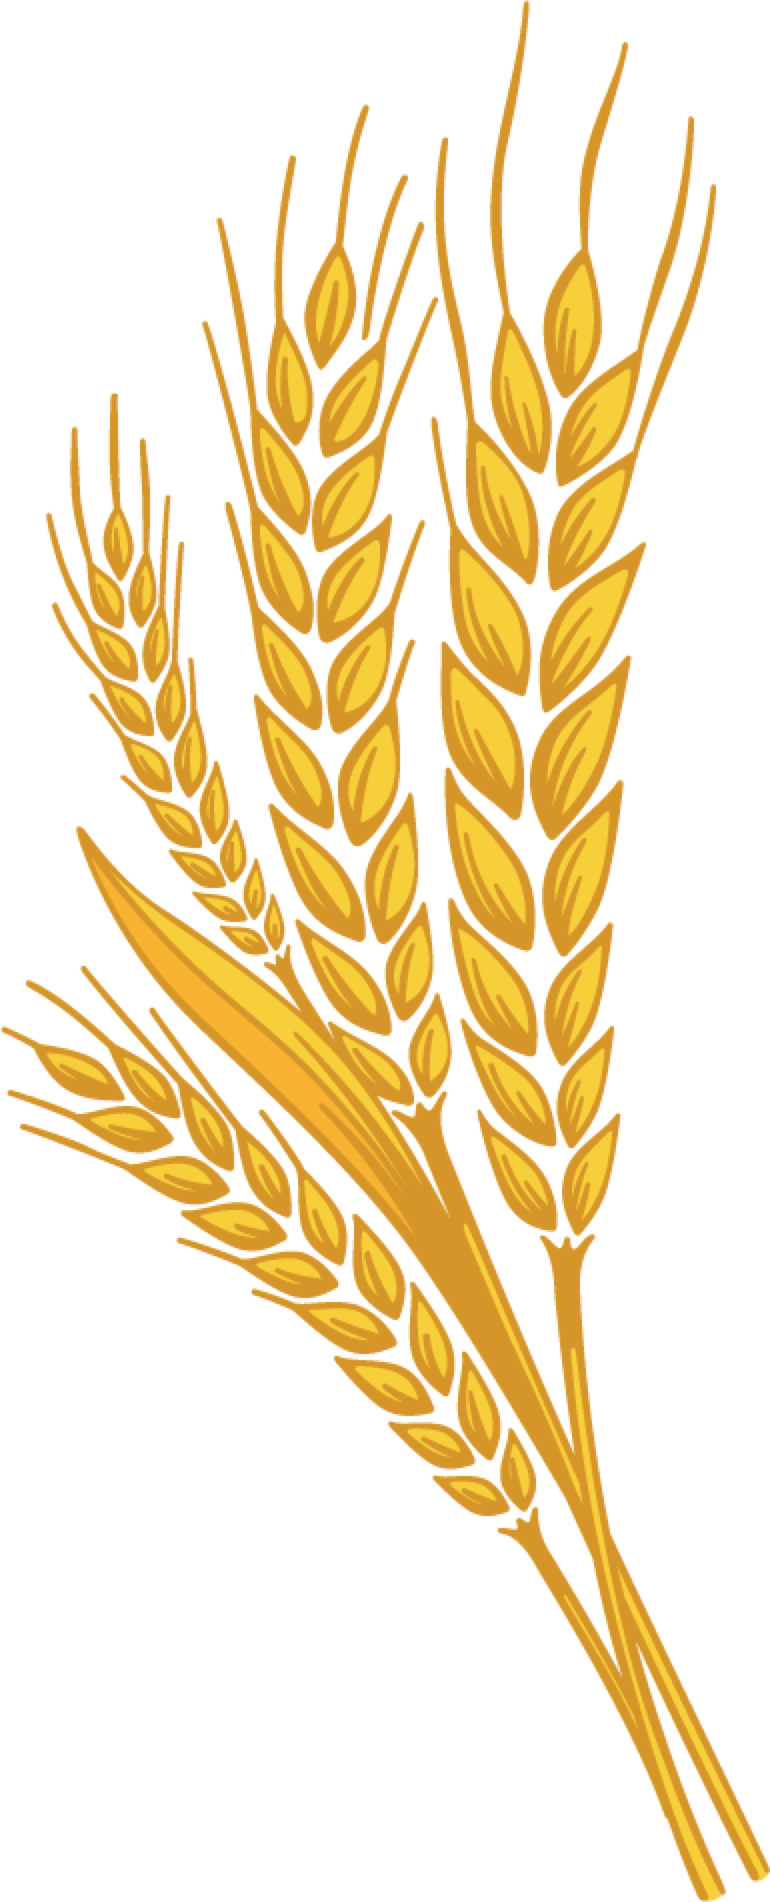 Golden Wheat Stalks Illustration PNG